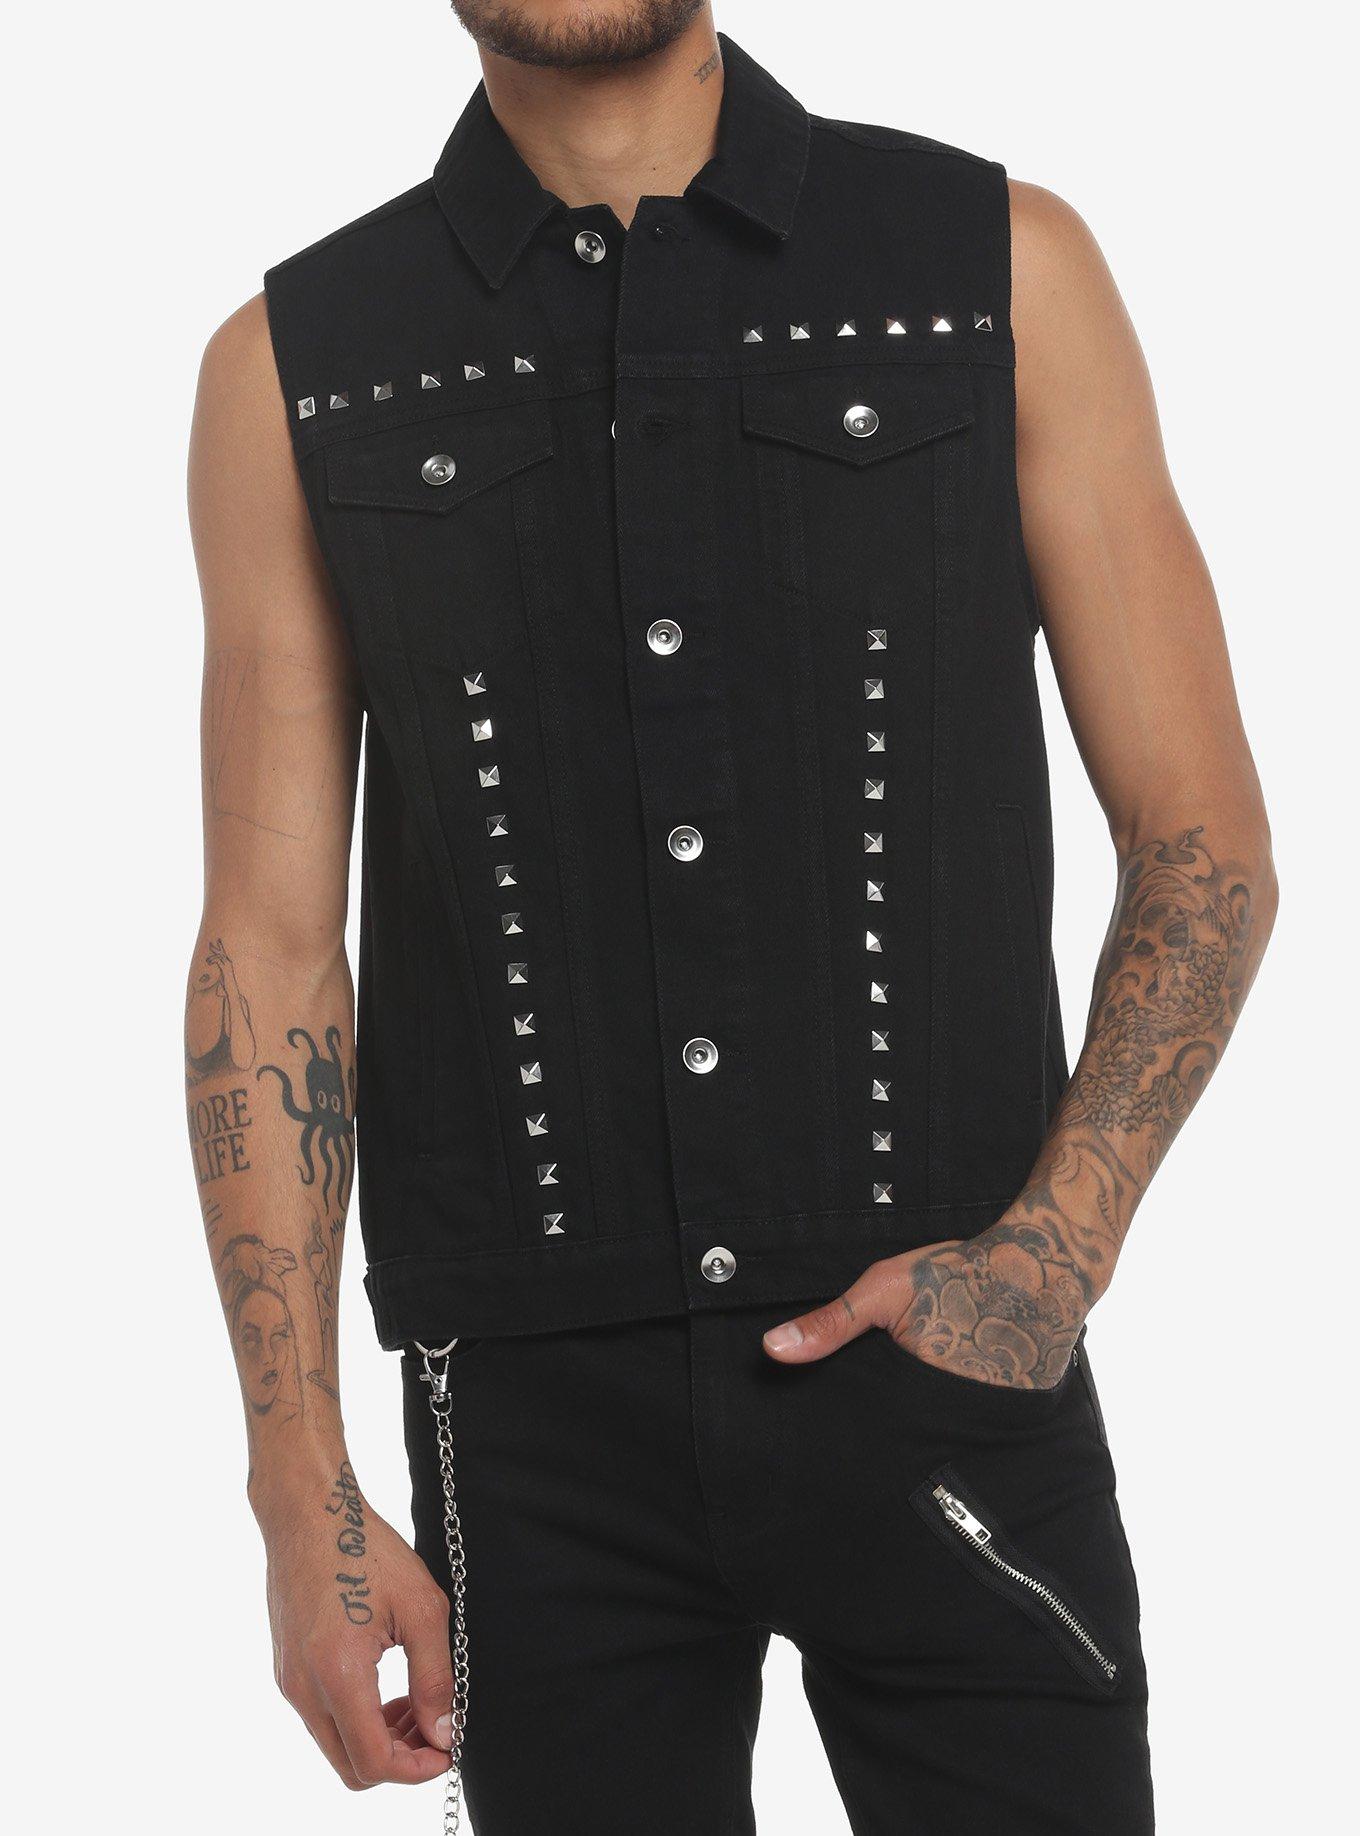 Juice Wrld Black Studded Jean Vest - Film Star Outfits